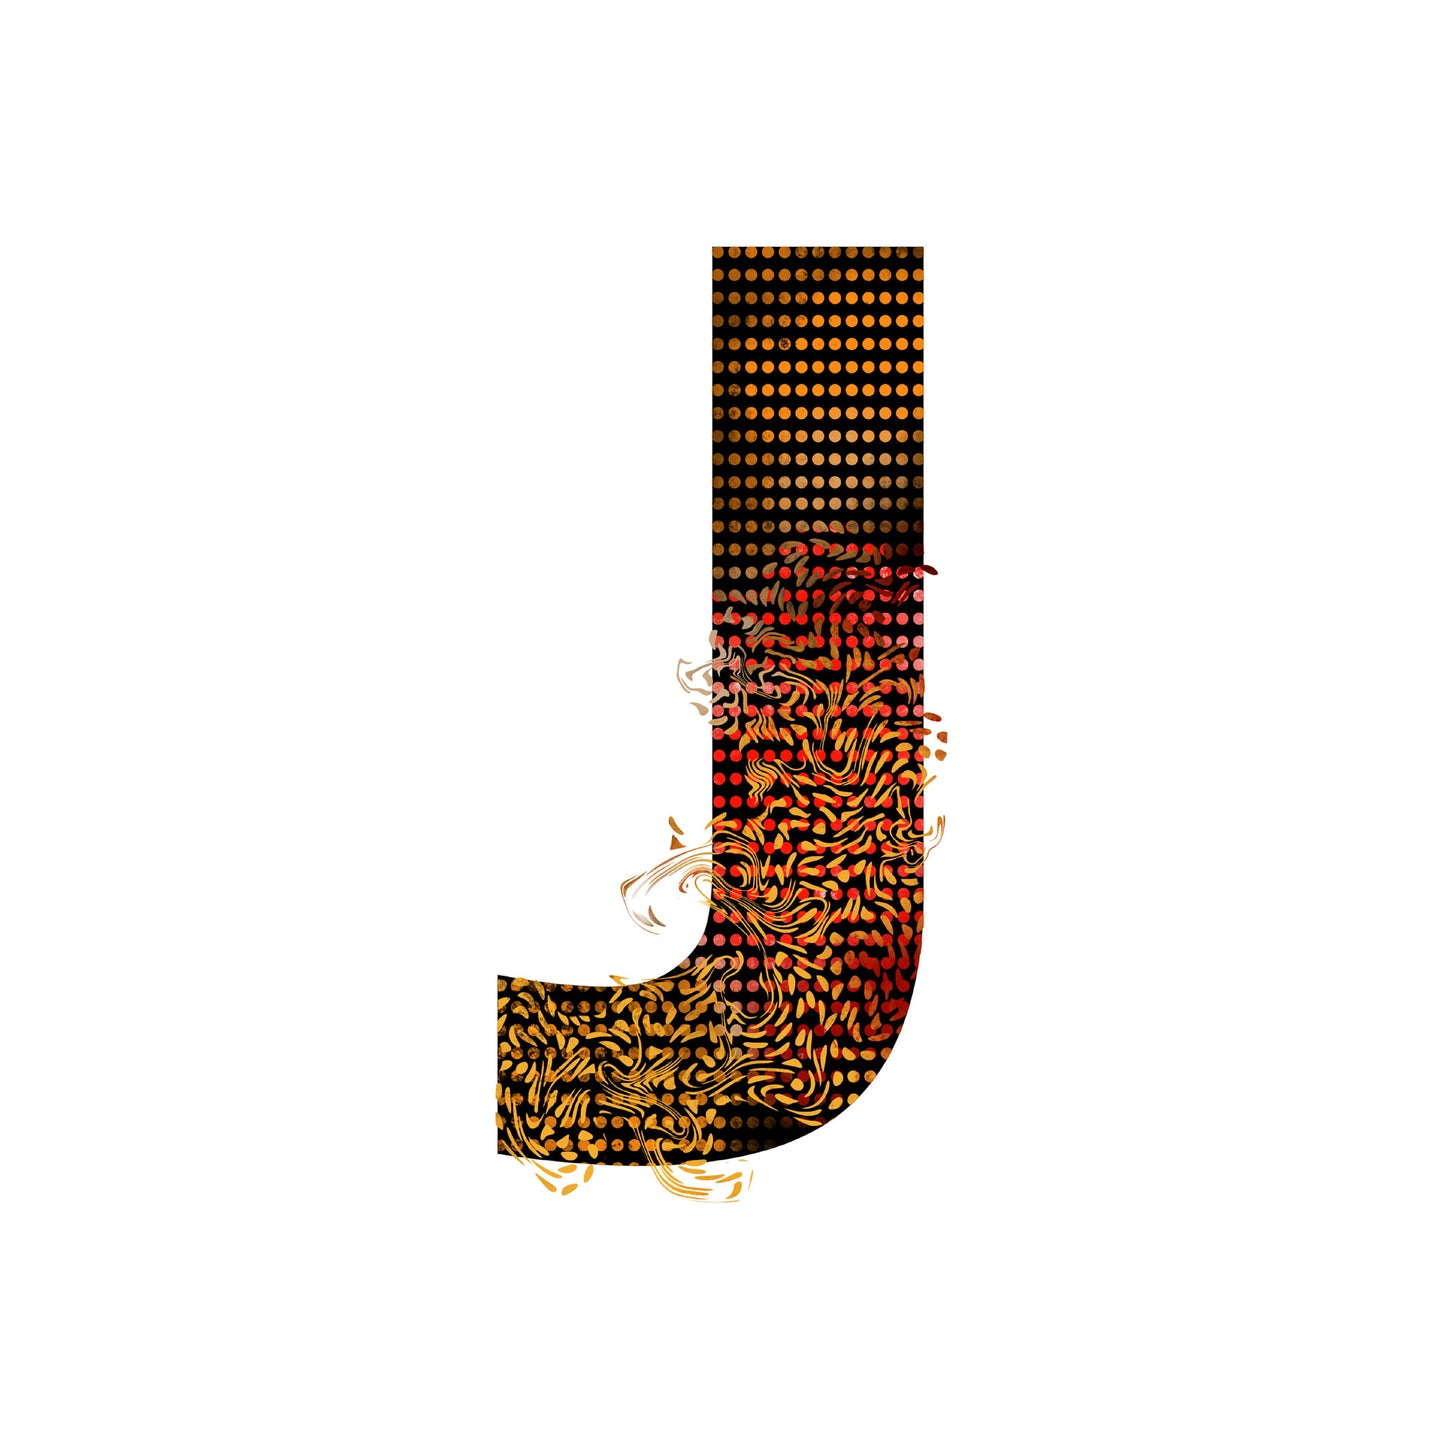 'WILD J' From the Wild Alphabet.